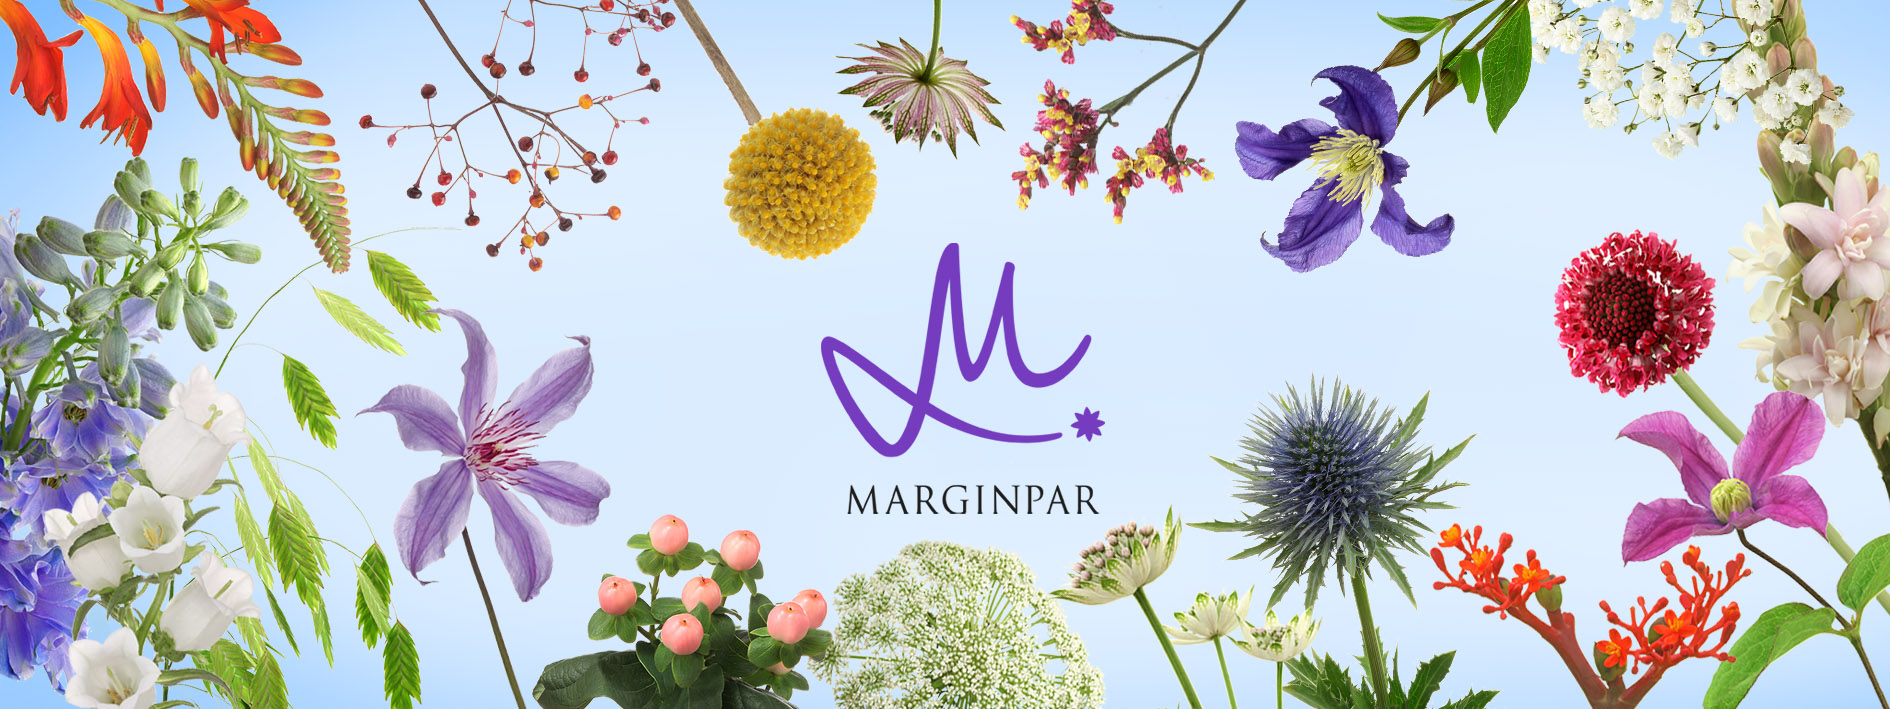 Marginpar Newsletter